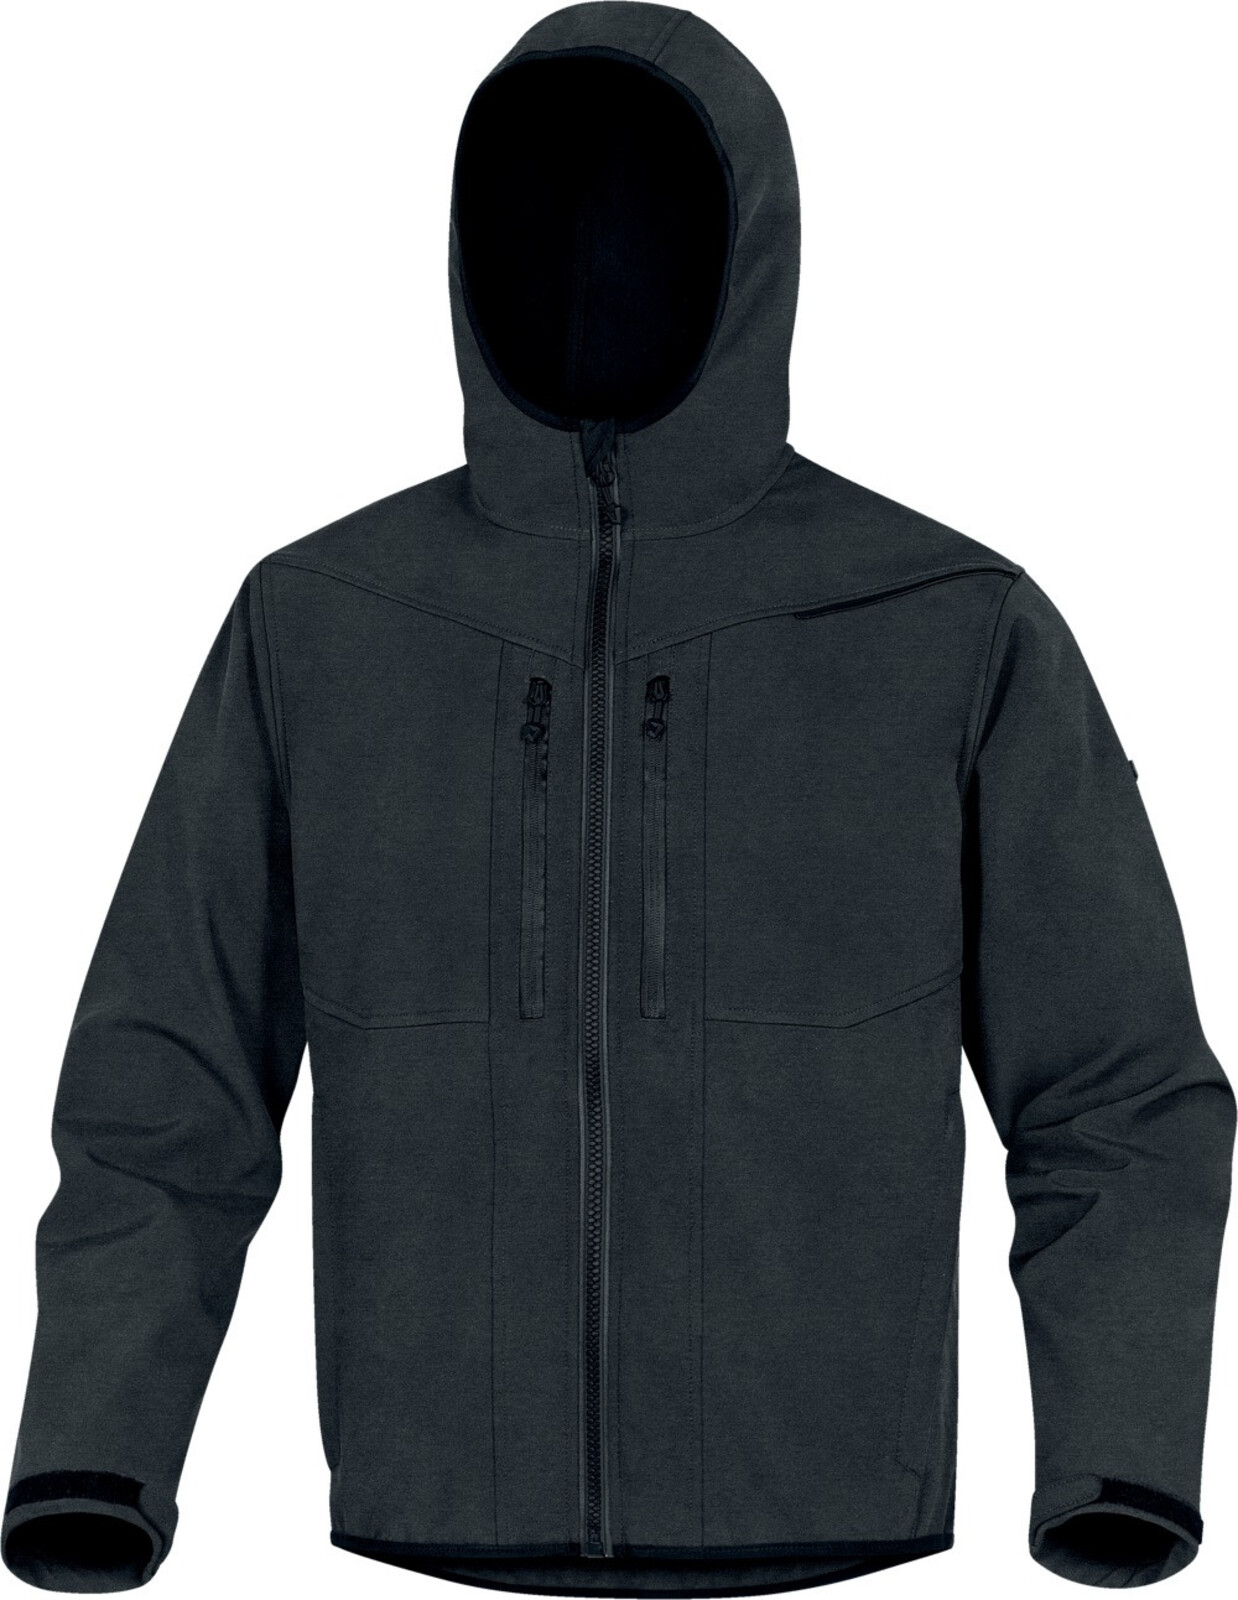 Softshellová bunda Delta Plus Horten2 - veľkosť: XXL, farba: čierna